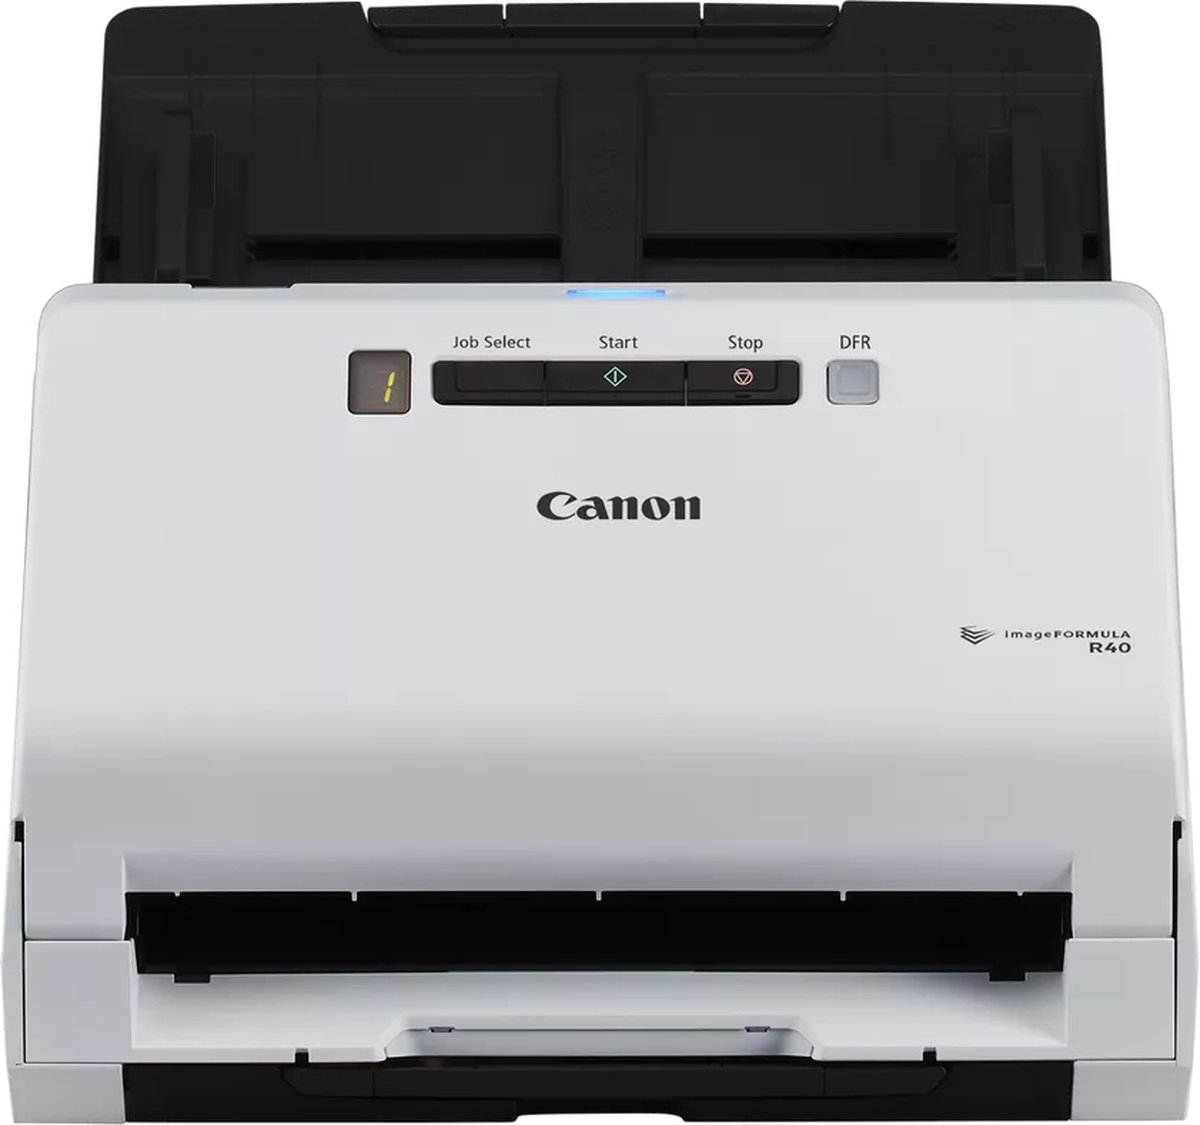 Canon ImageFormula RS40 Photo Scanner